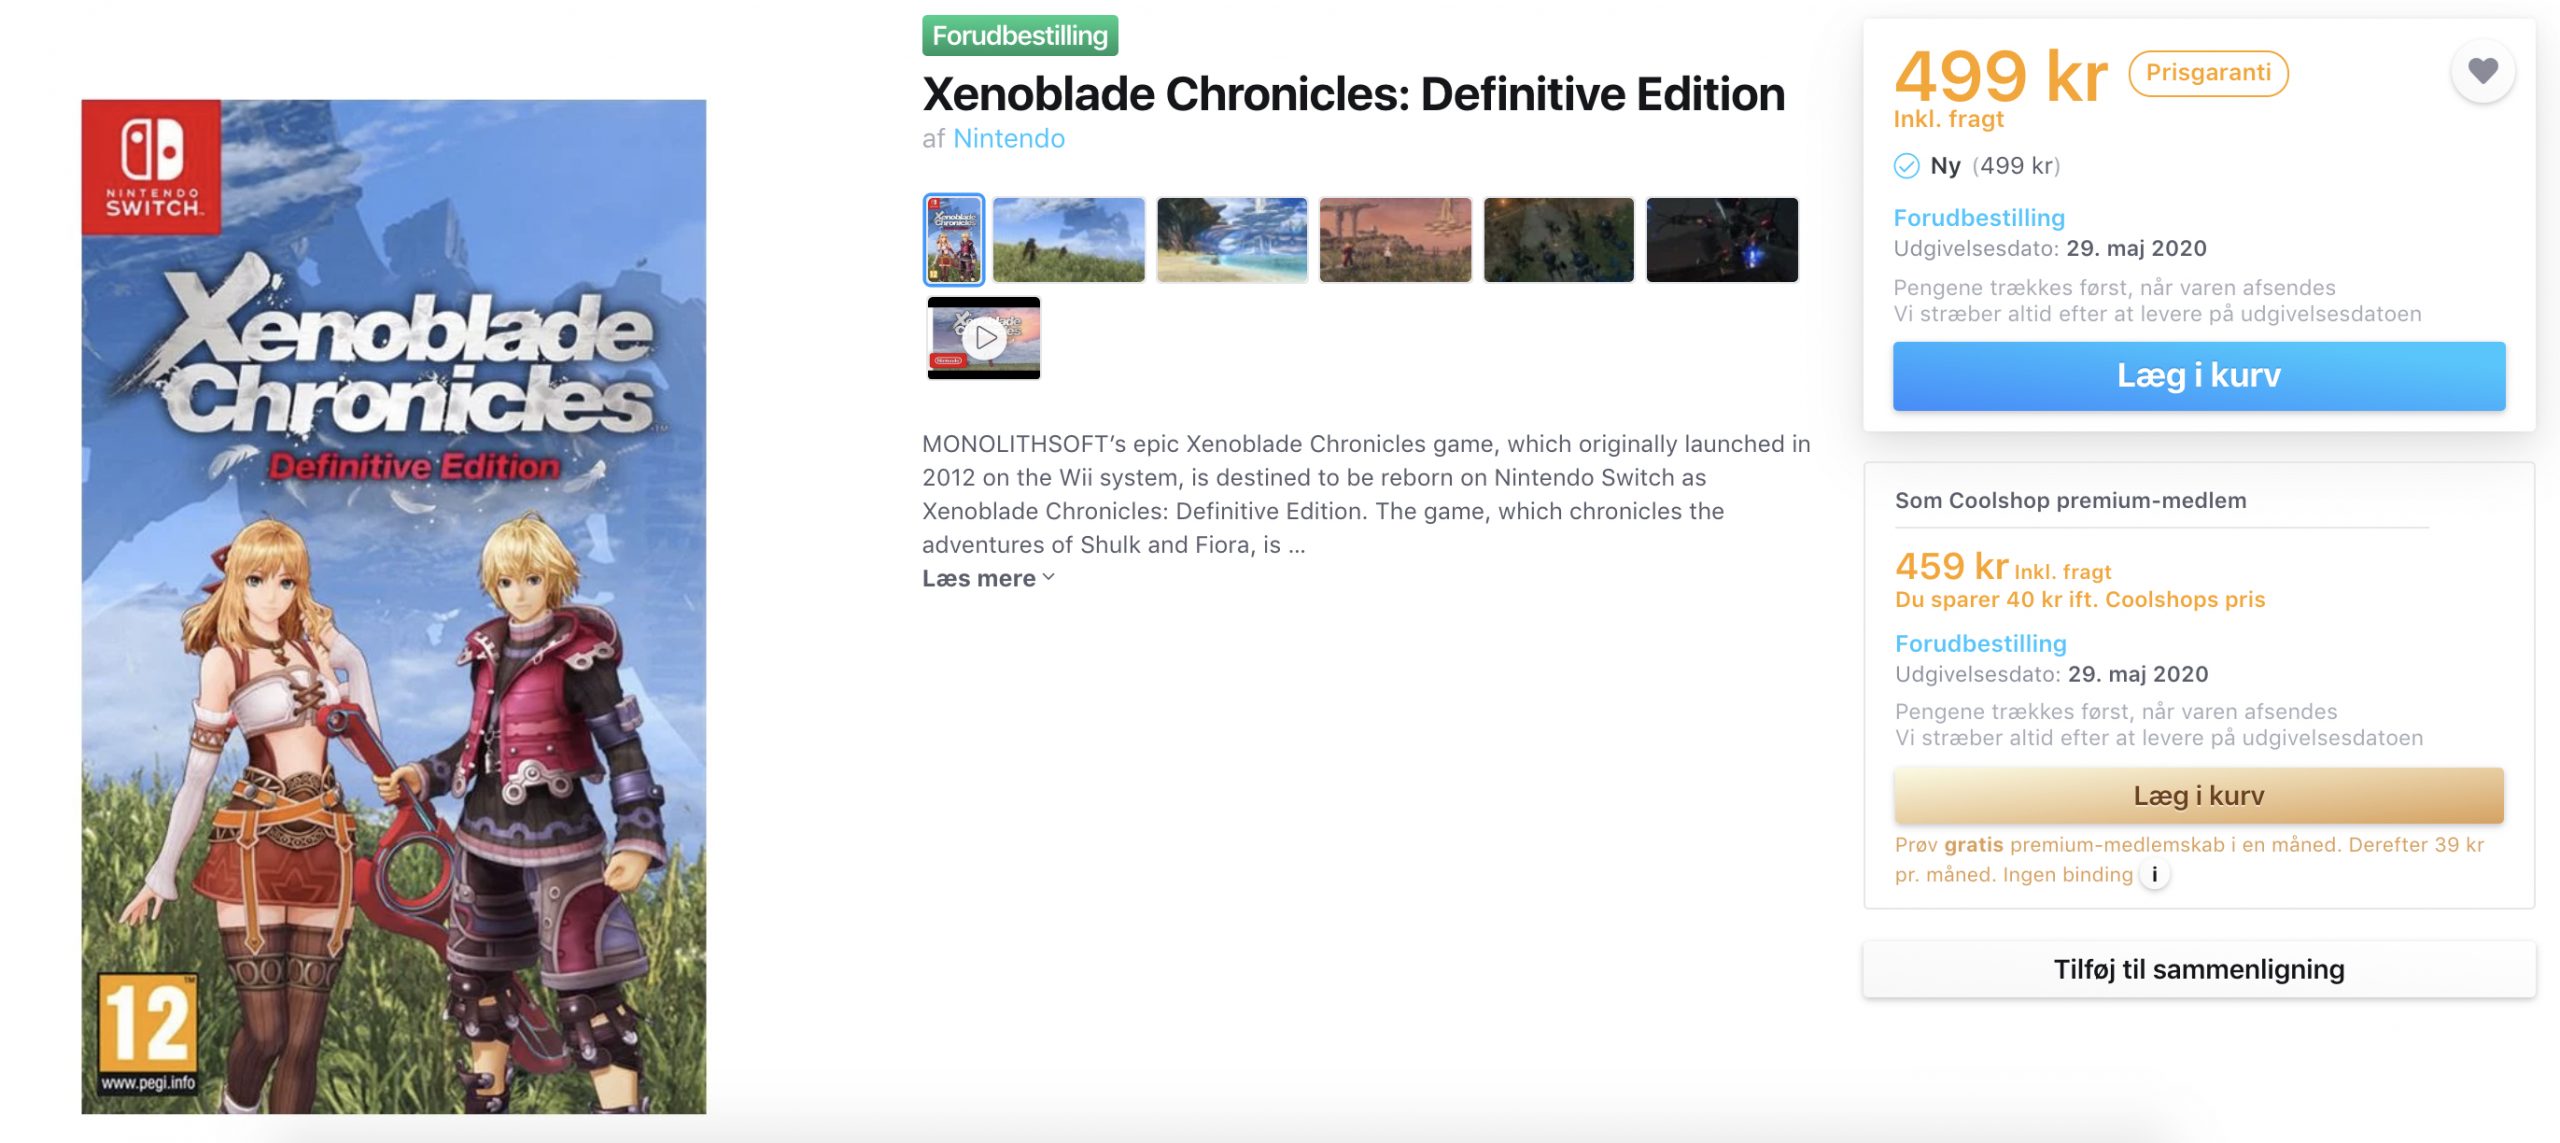 Xenoblade Chronicles: Definitive Edition saldrá en mayo según minorista